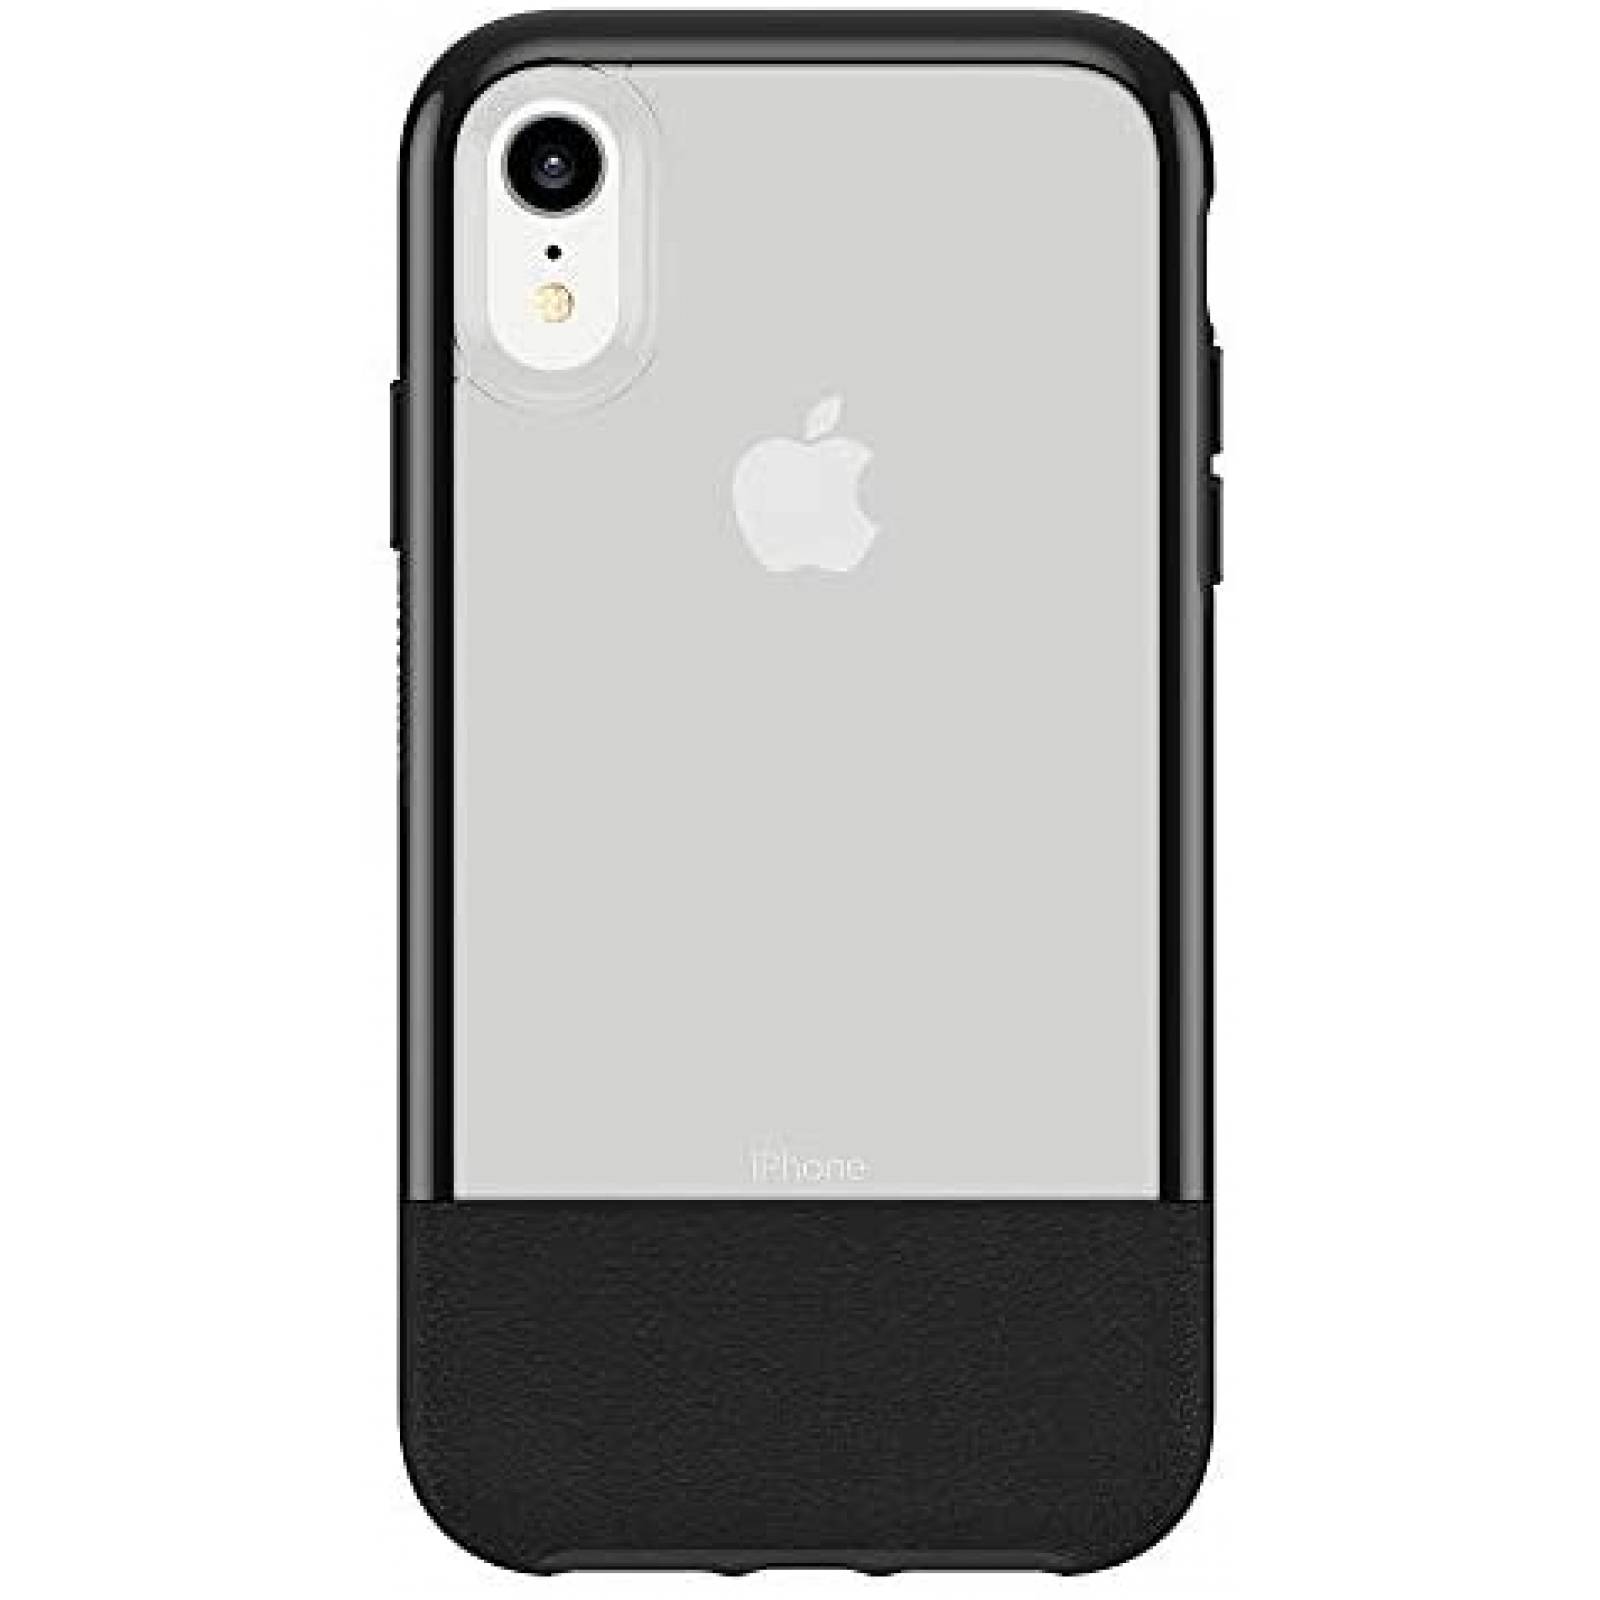 Funda Protectora OtterBox IPhone XR Diseño Simple -Negra